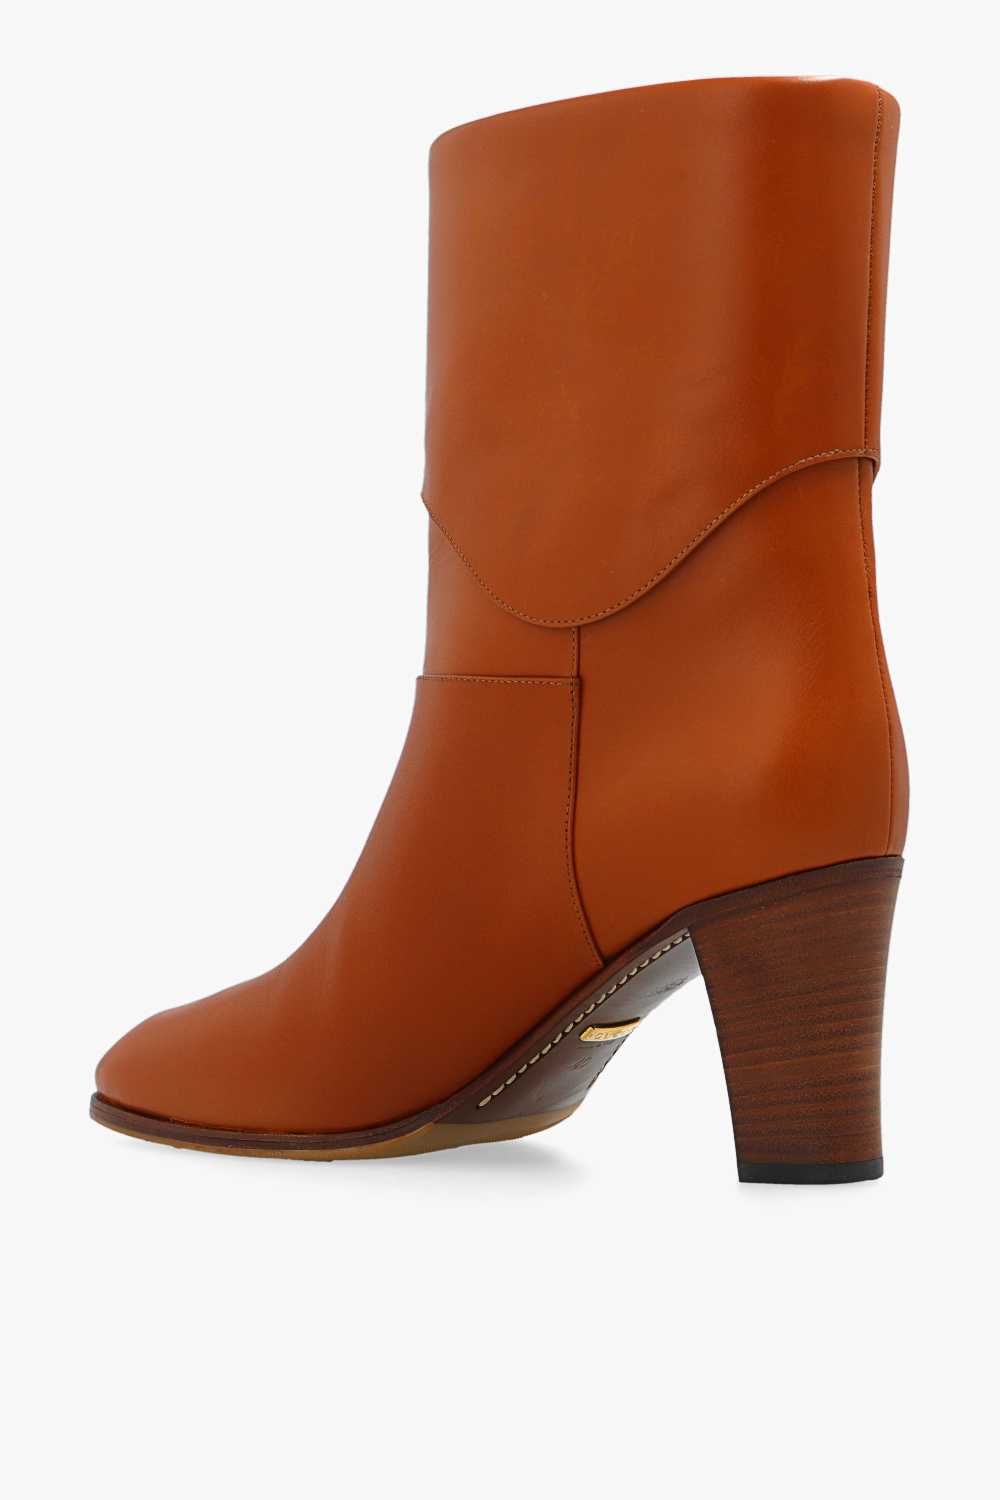 Gucci ‘Elizabeth’ heeled ankle accessorises